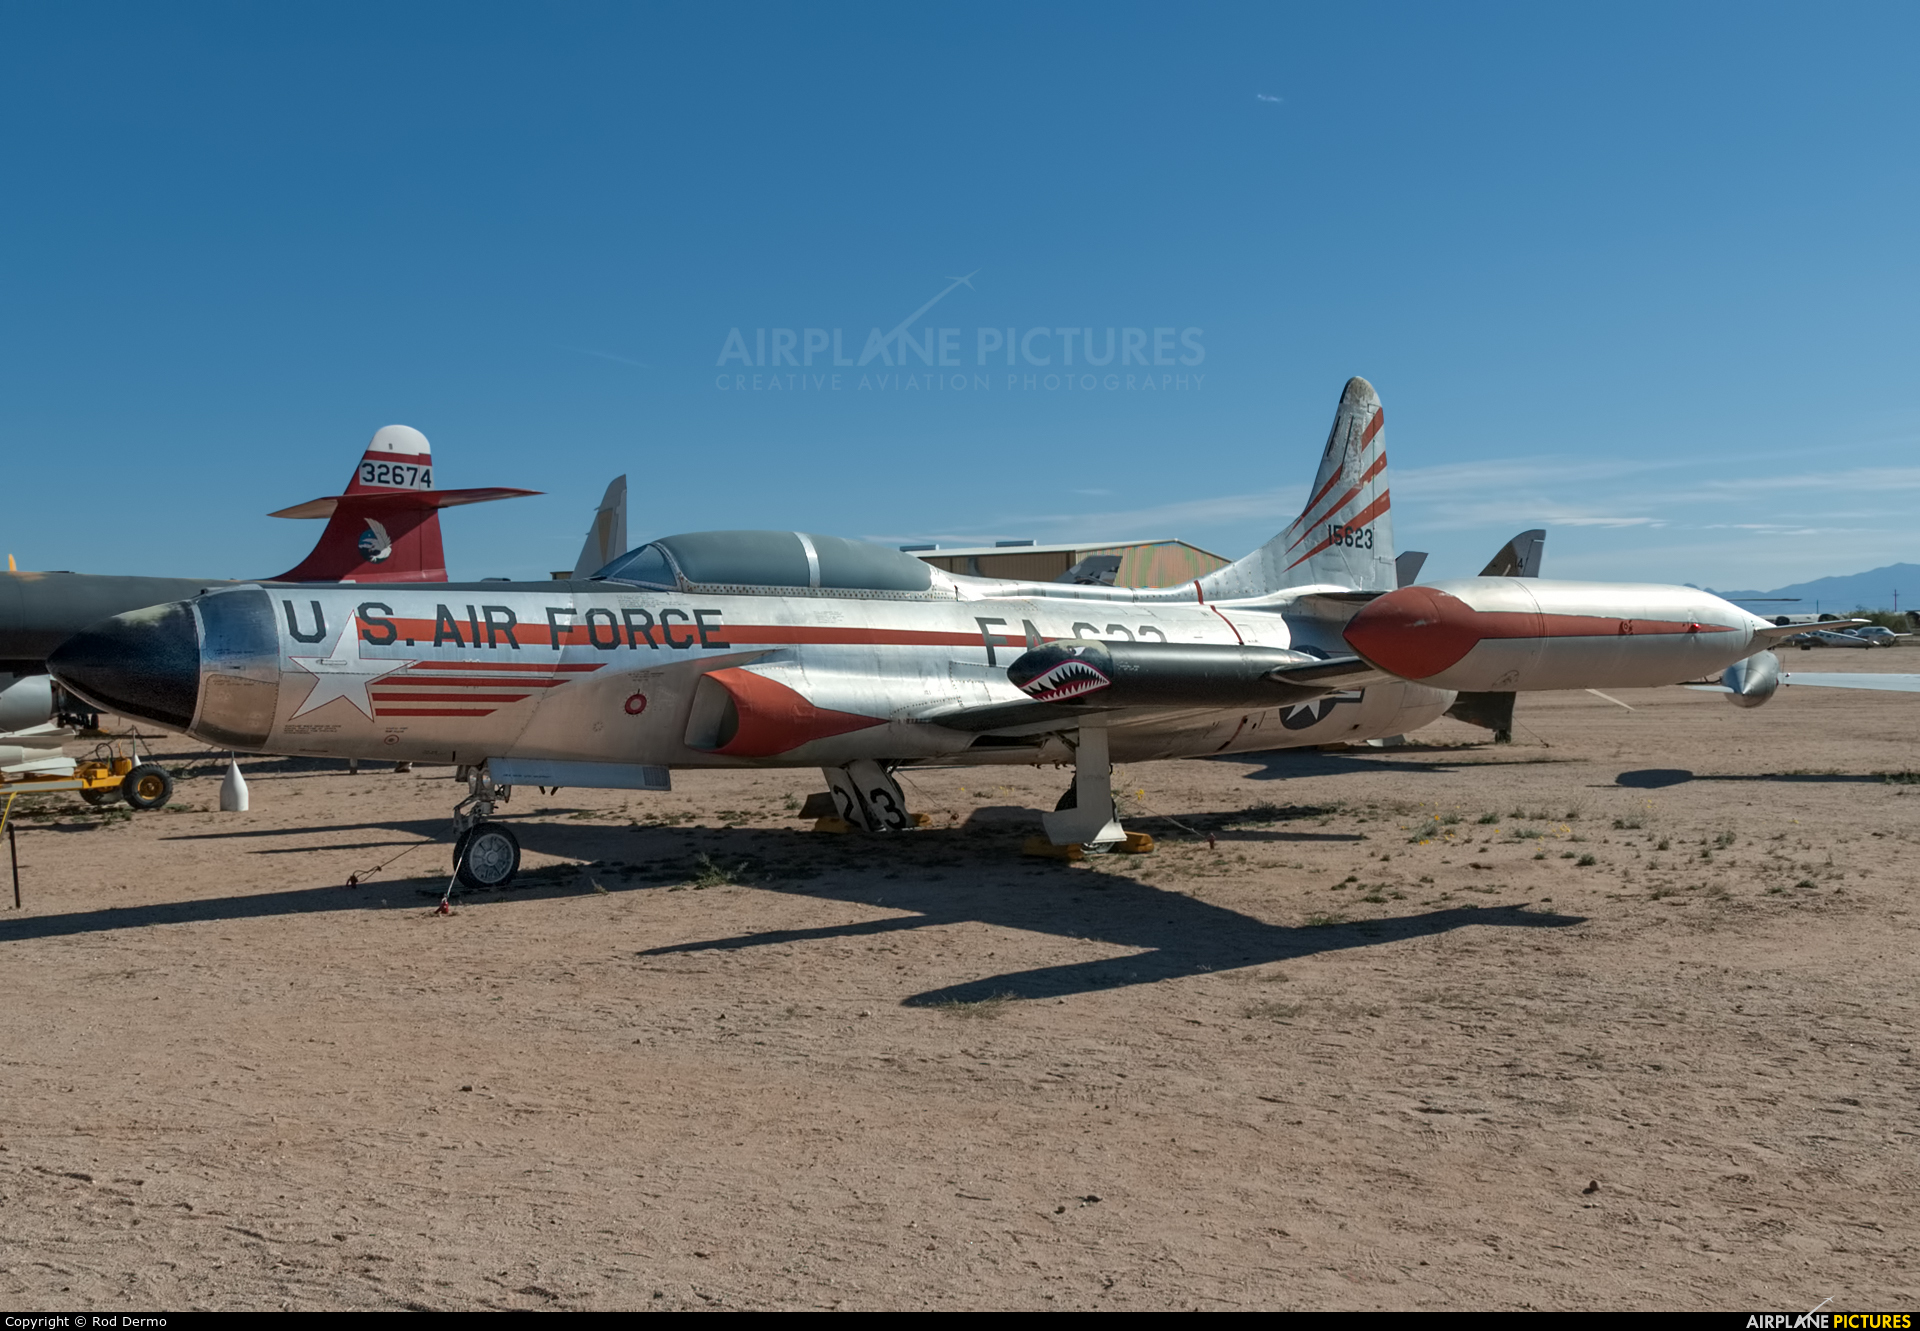 USA - Air Force 51-5623 aircraft at Tucson - Pima Air & Space Museum